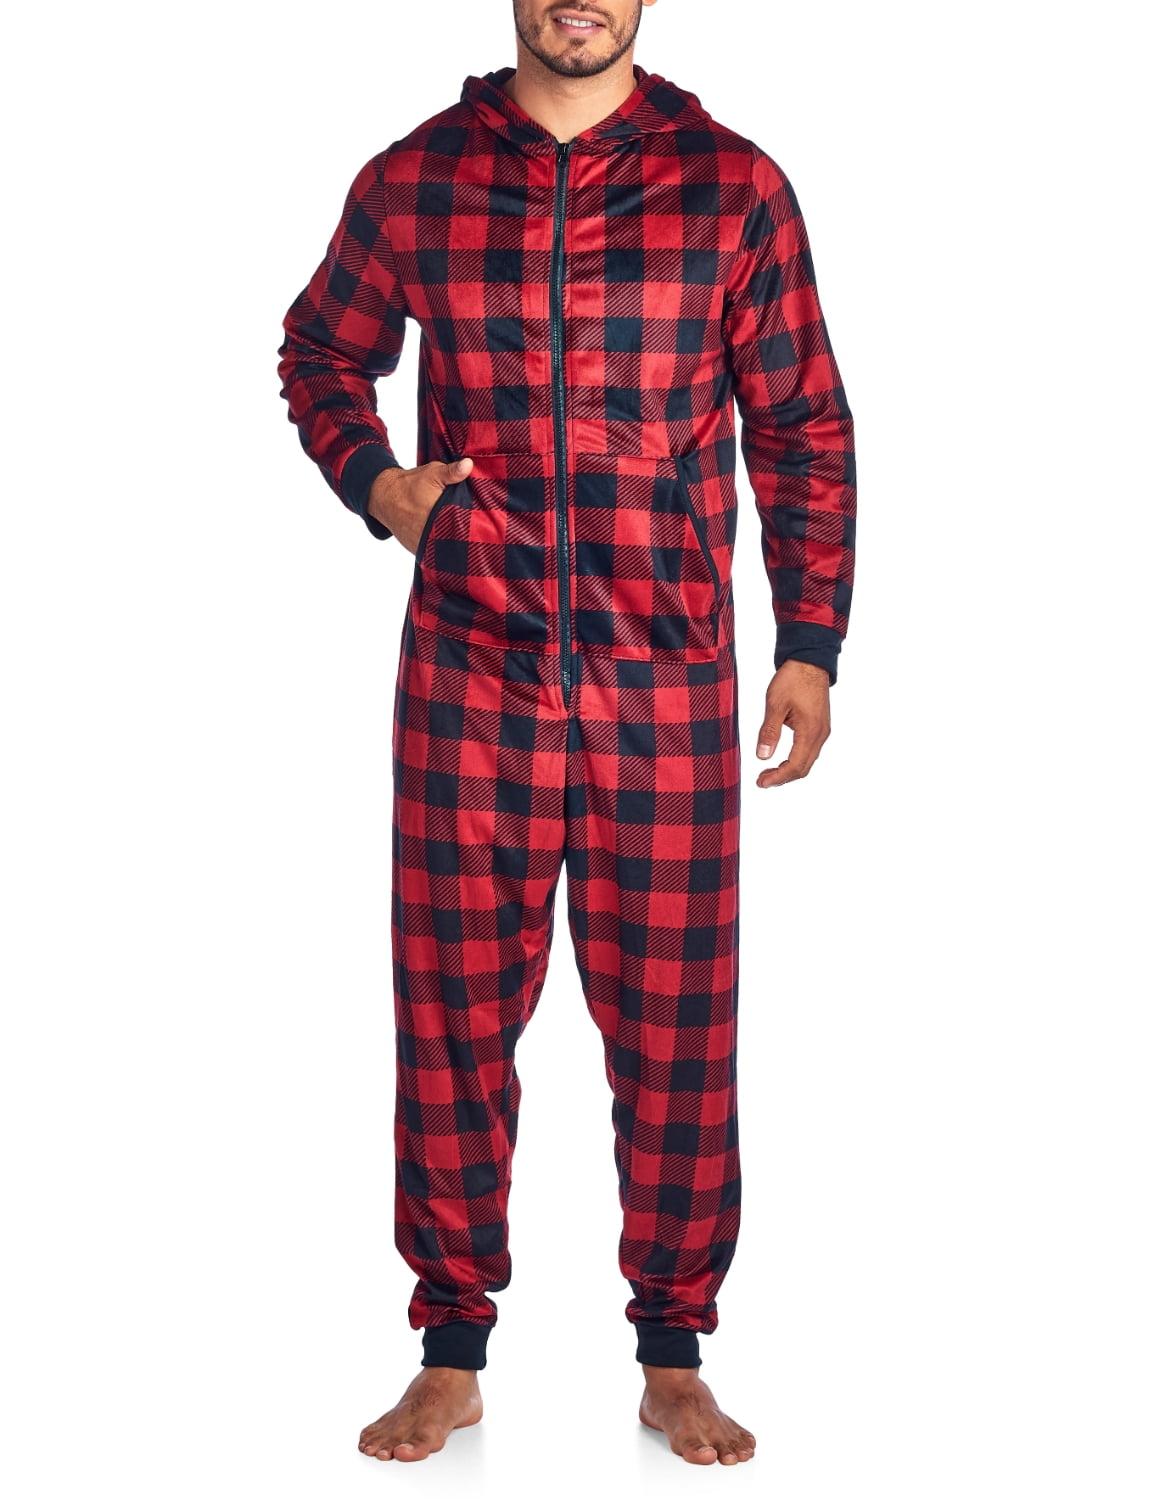 Ashford & Brooks Men's Adult Fleece Hooded One-Piece Union Suit Pajamas Jumpsuit 